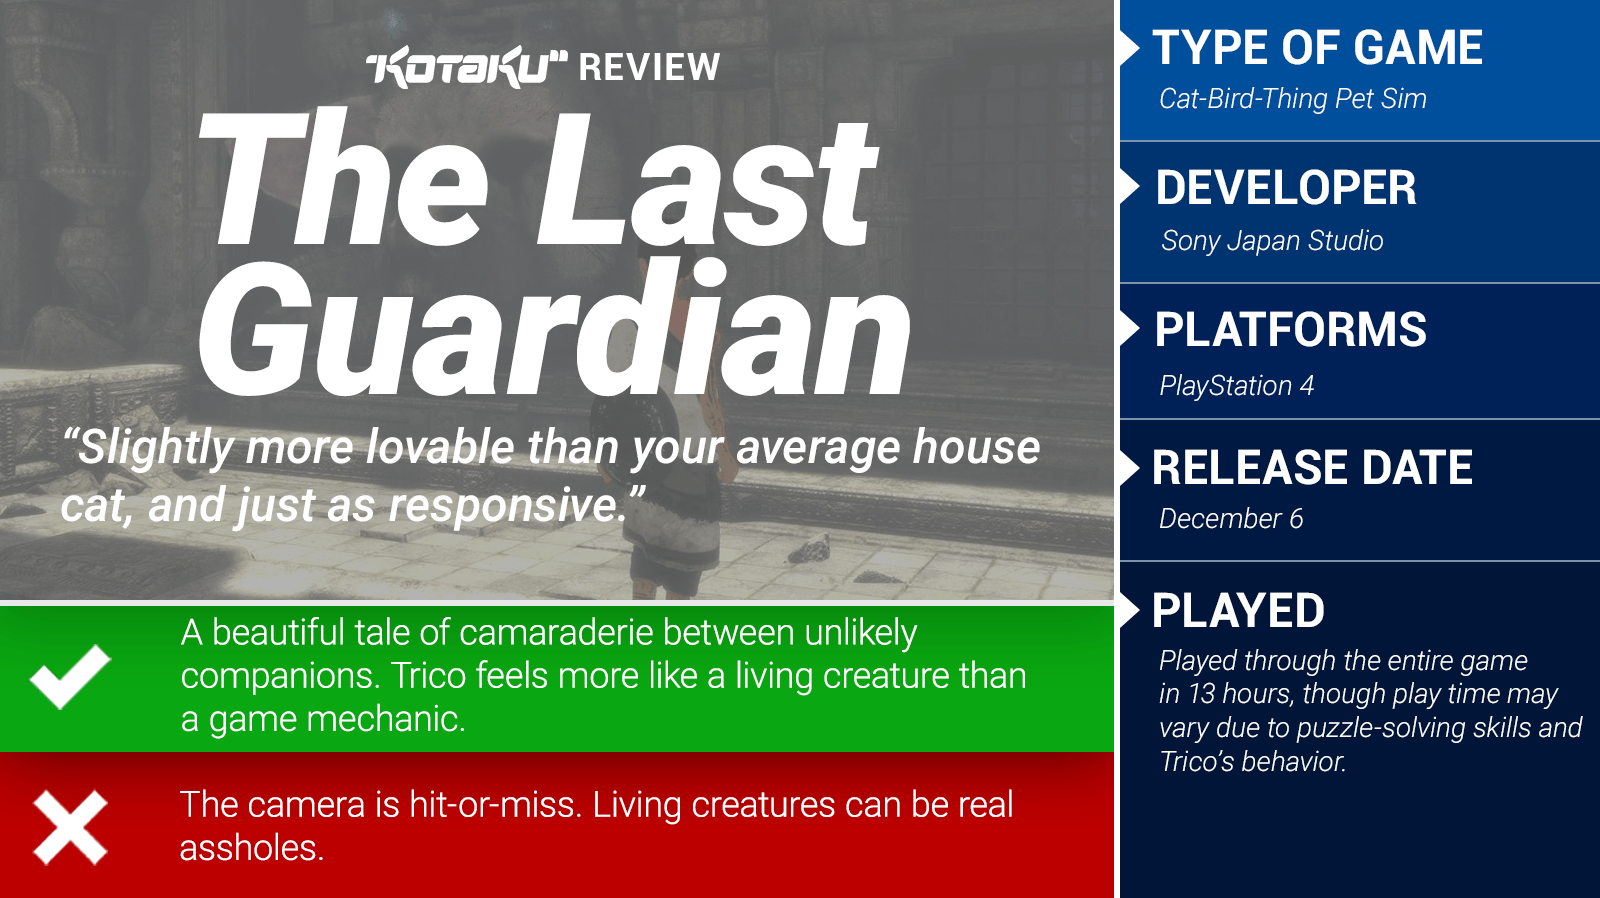 The Last Guardian: The Kotaku Review